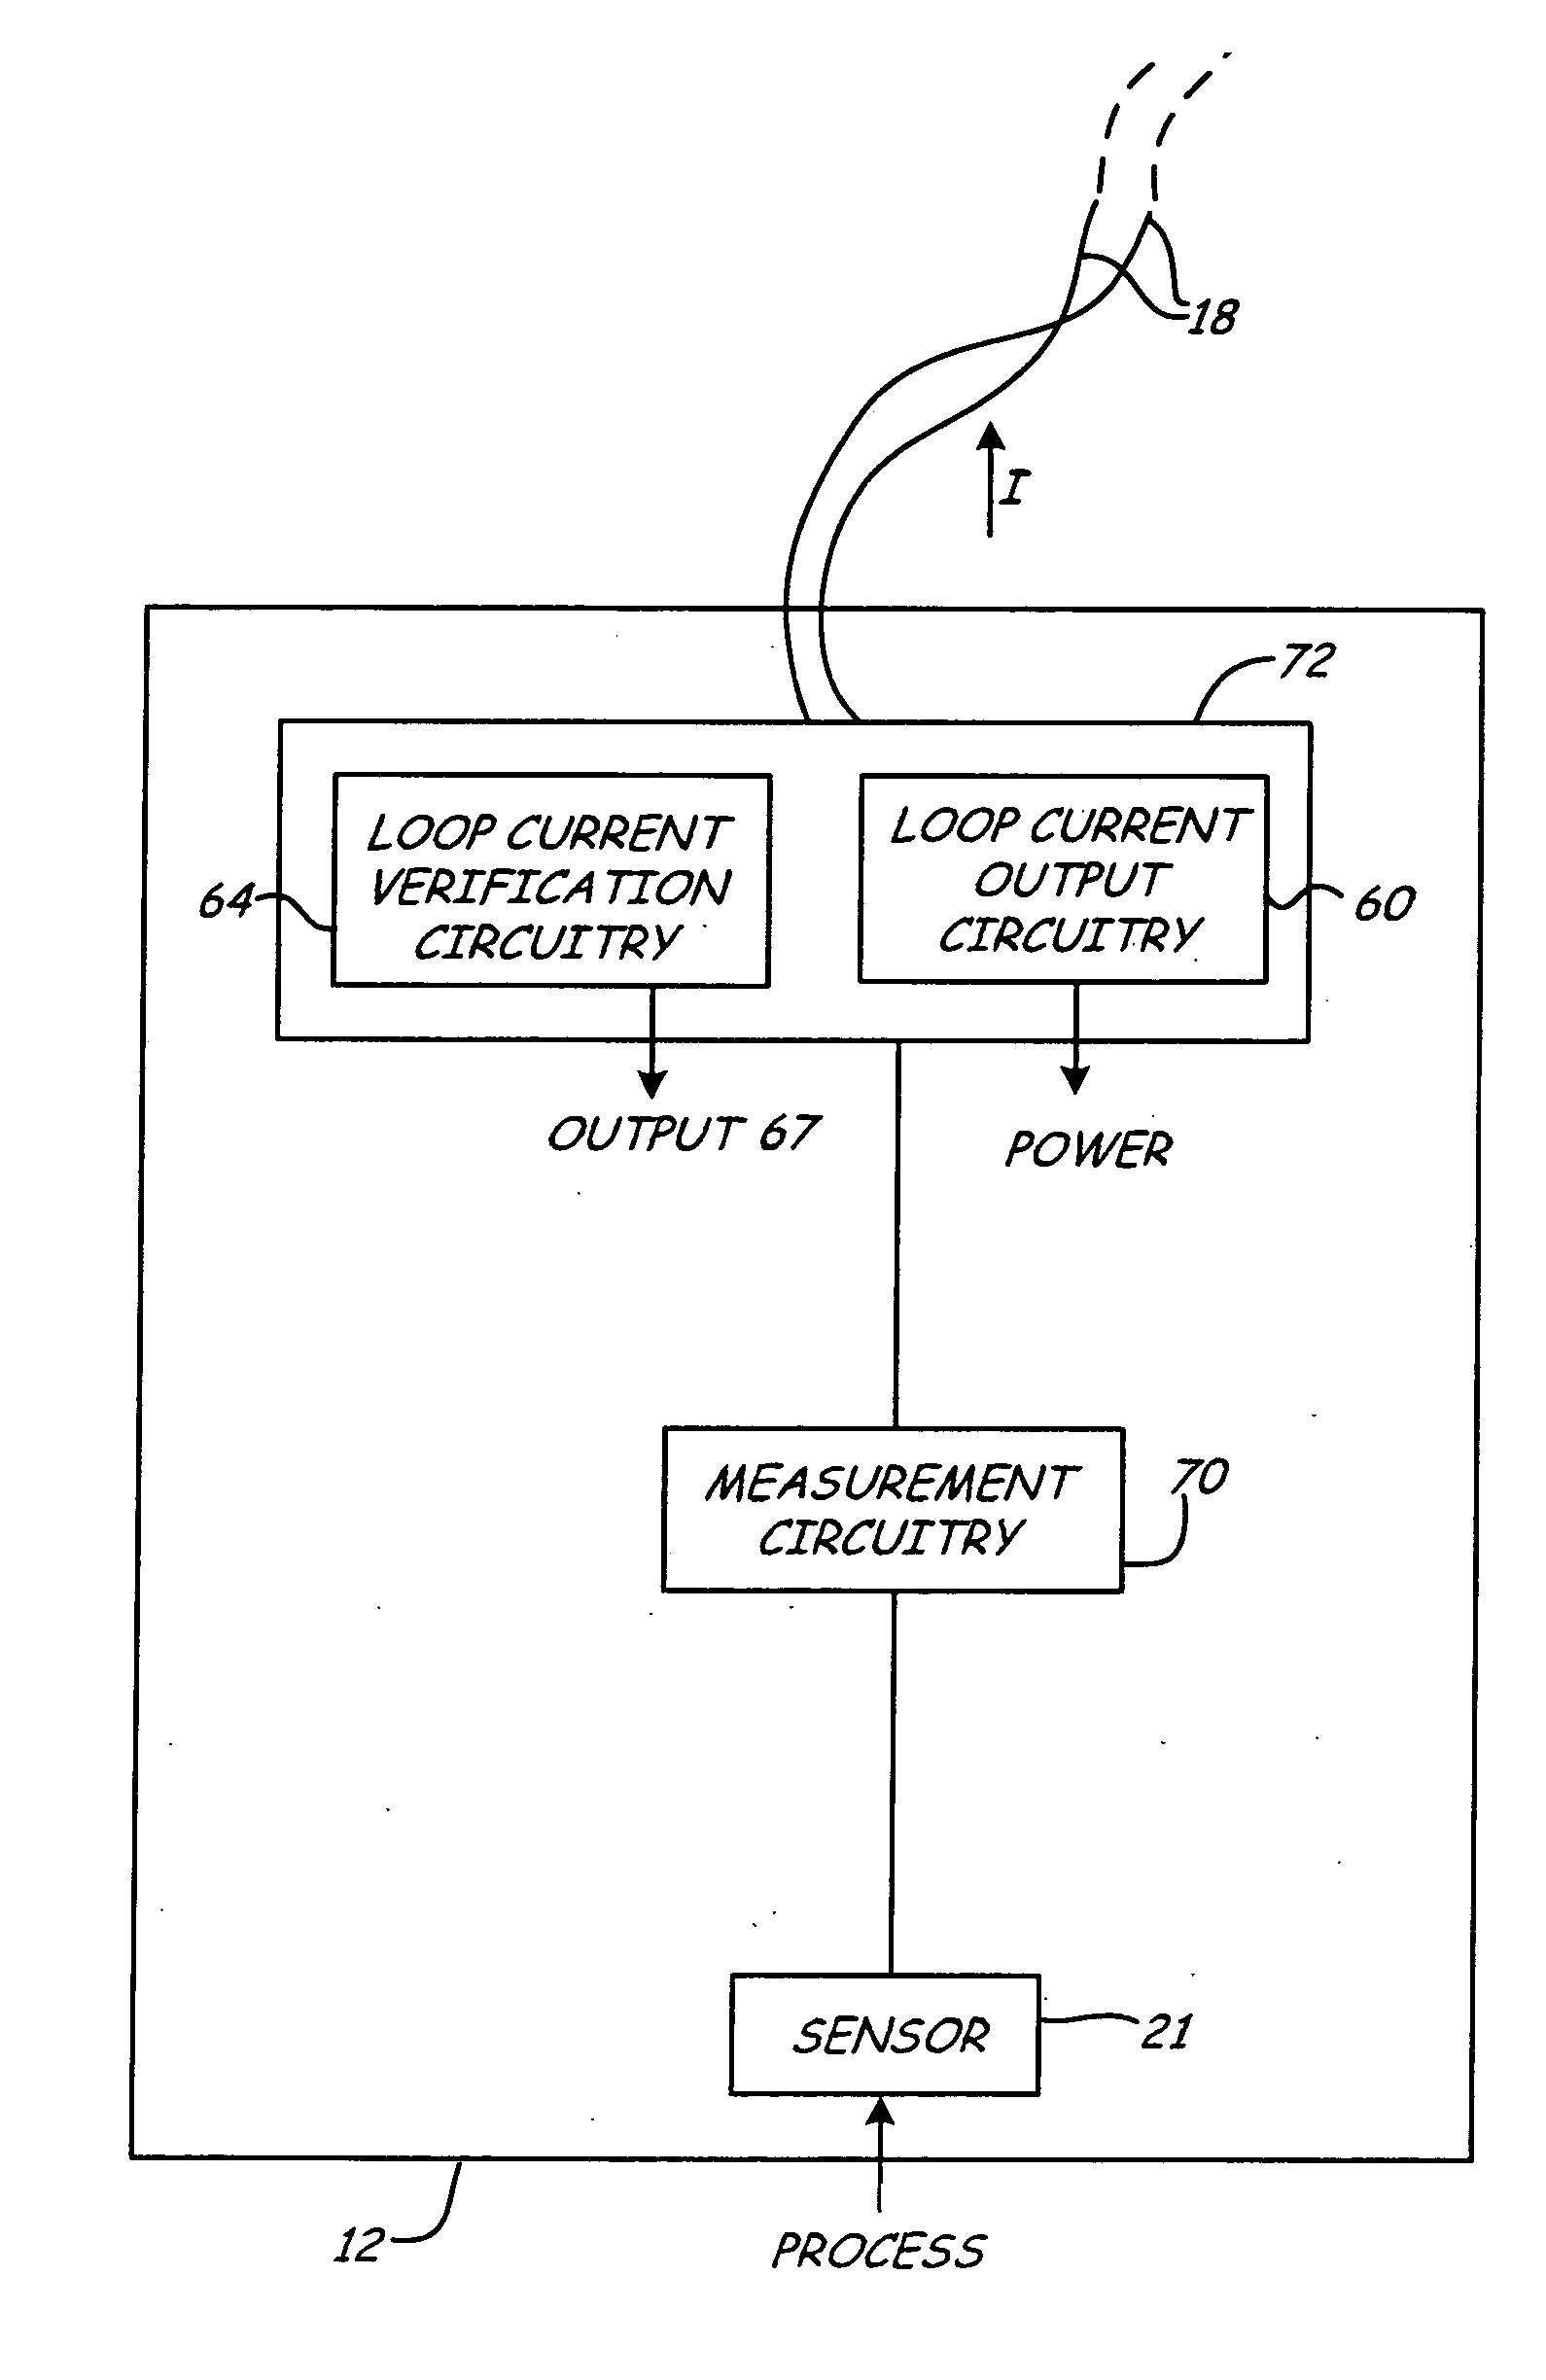 Process control loop current verification